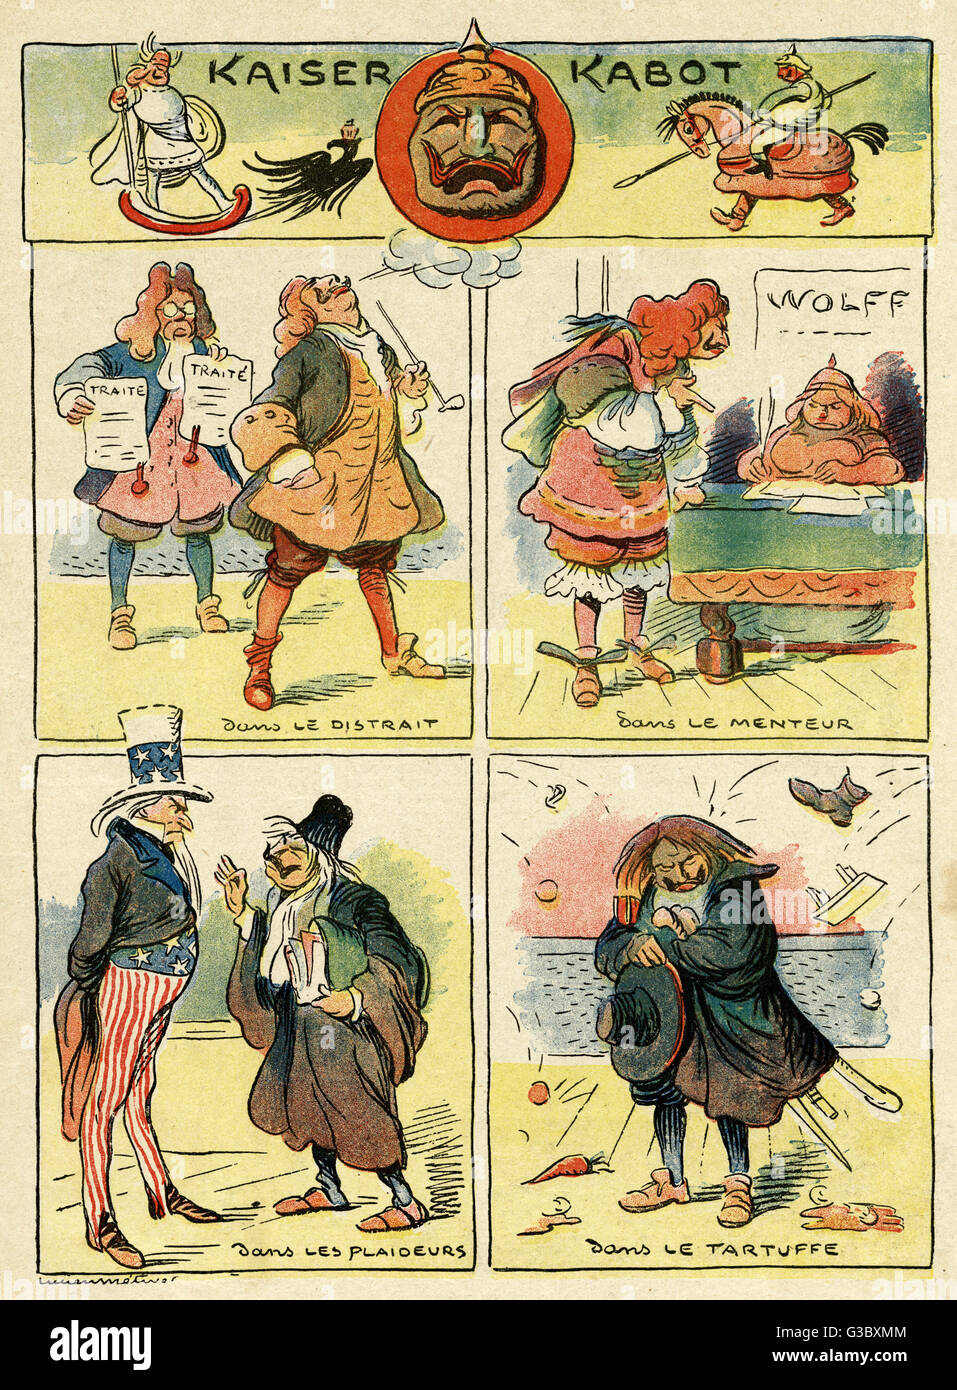 Cartoon, Kaiser Kabot (Kaiser Wilhelm II, the ham actor), showing the